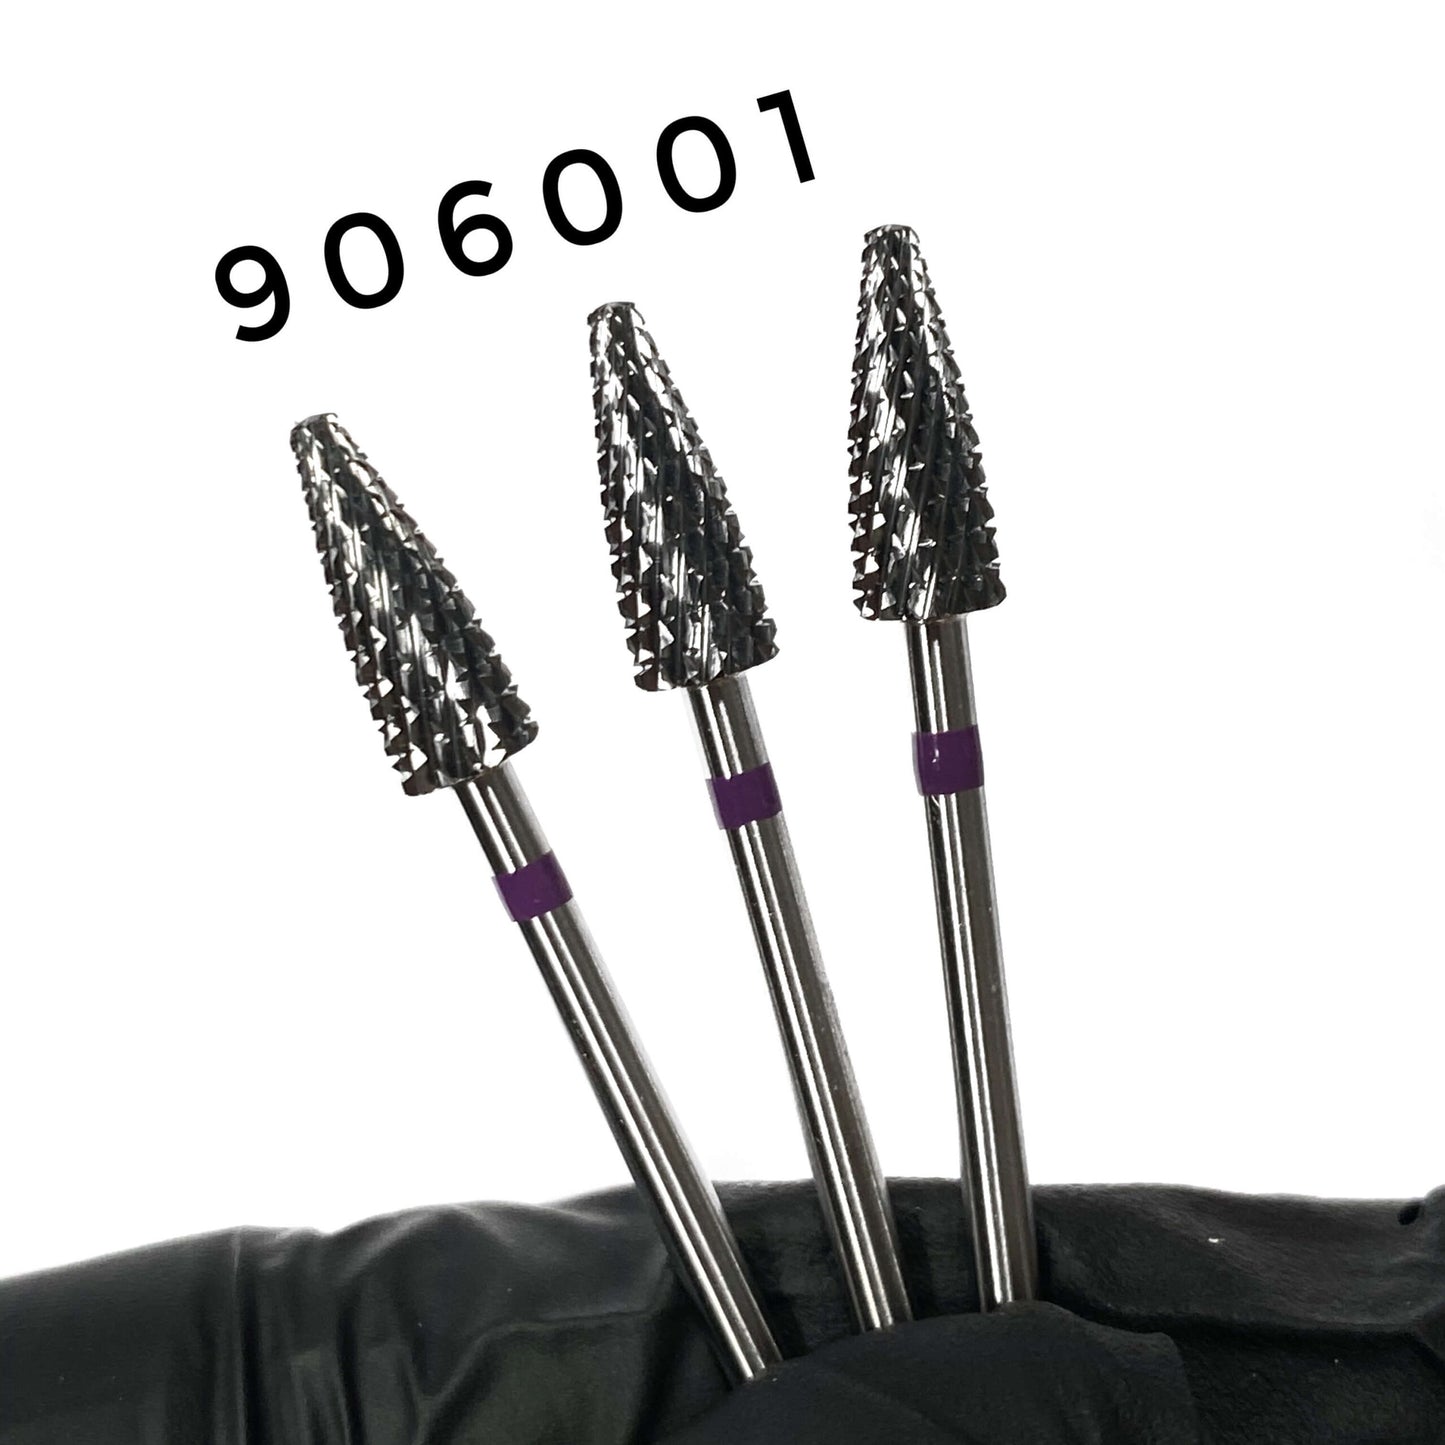 906001 - Tungsten carbide universal cutter with purple knurling